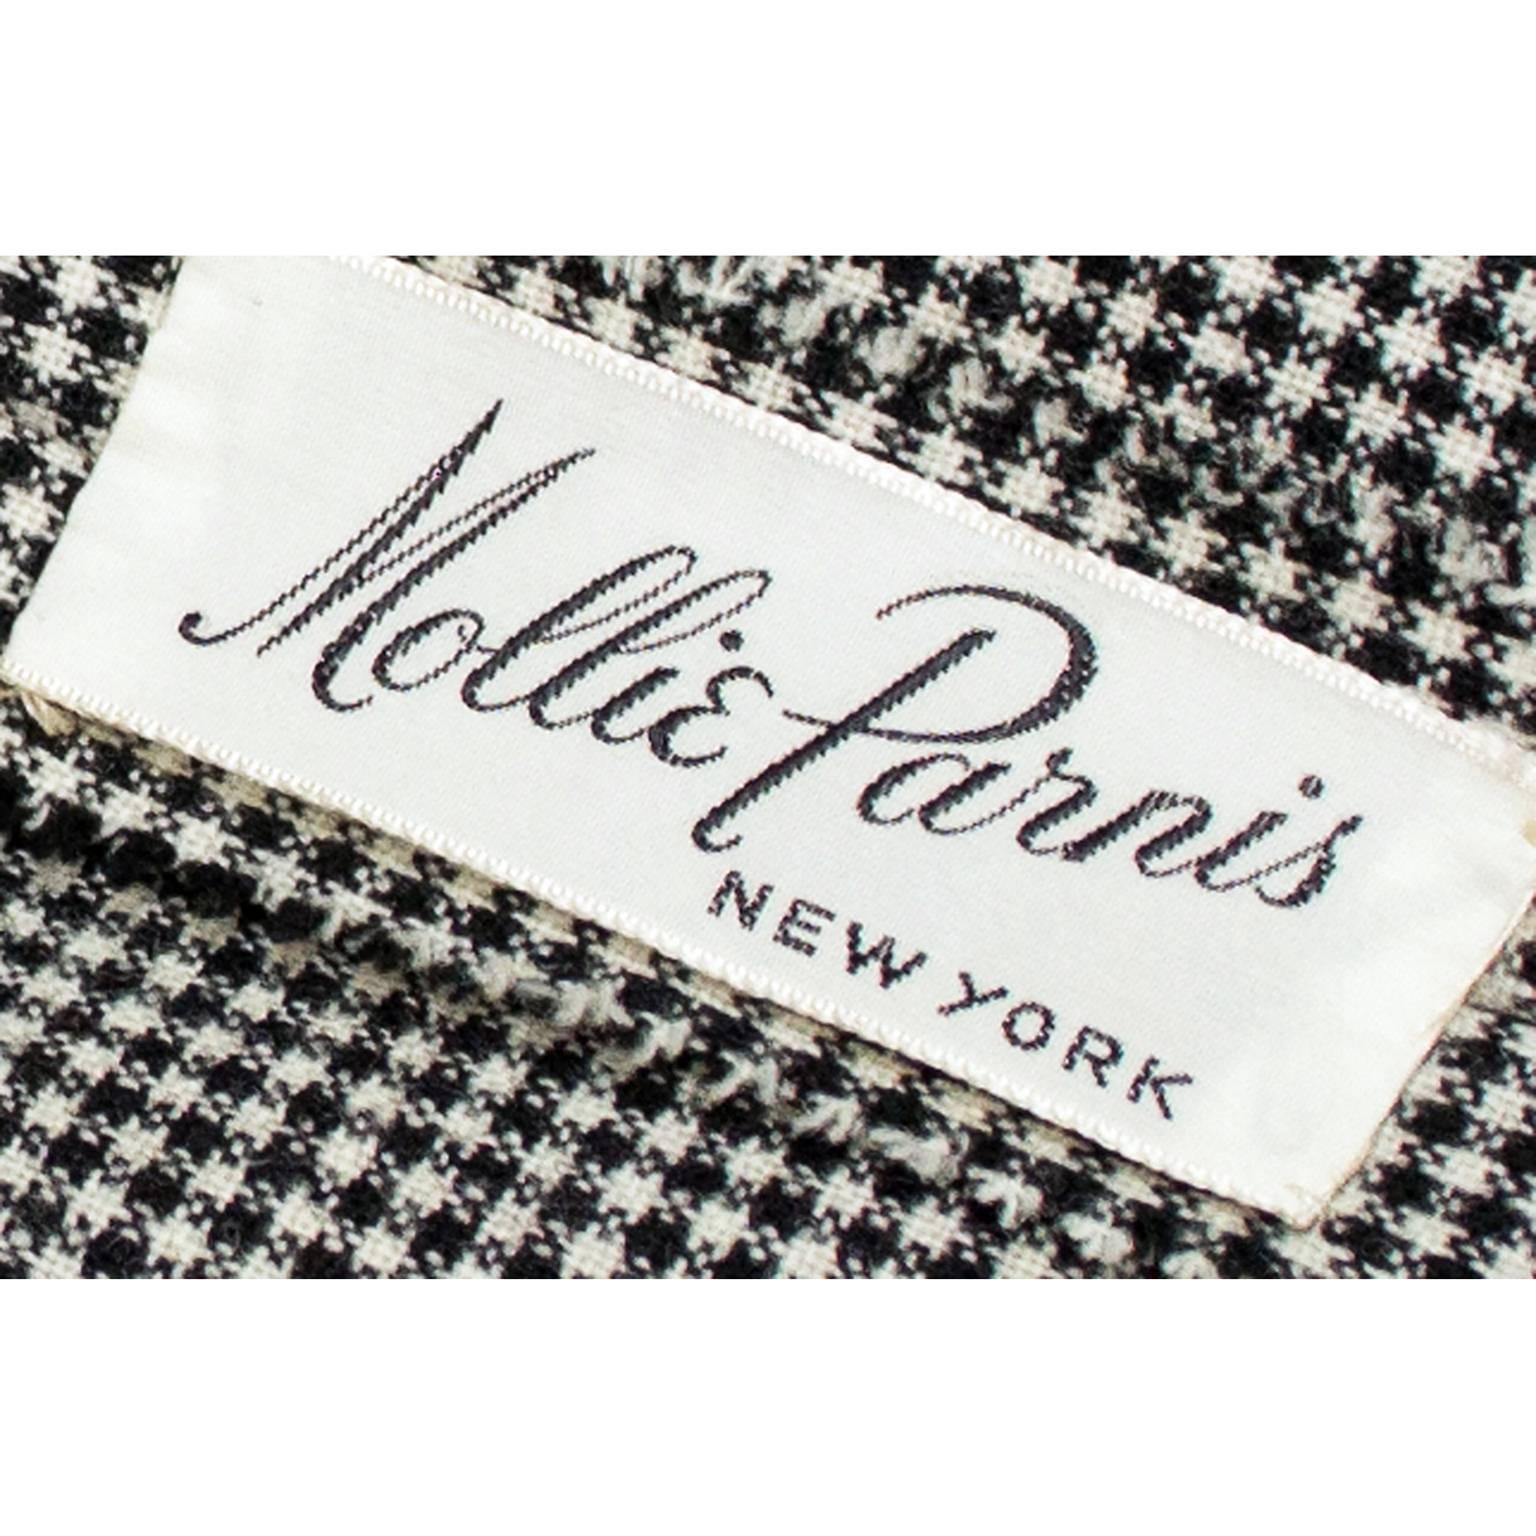 Mollie Parnis VIntage Dress 1951 Documented Hapers Bazaar Black White Check 1